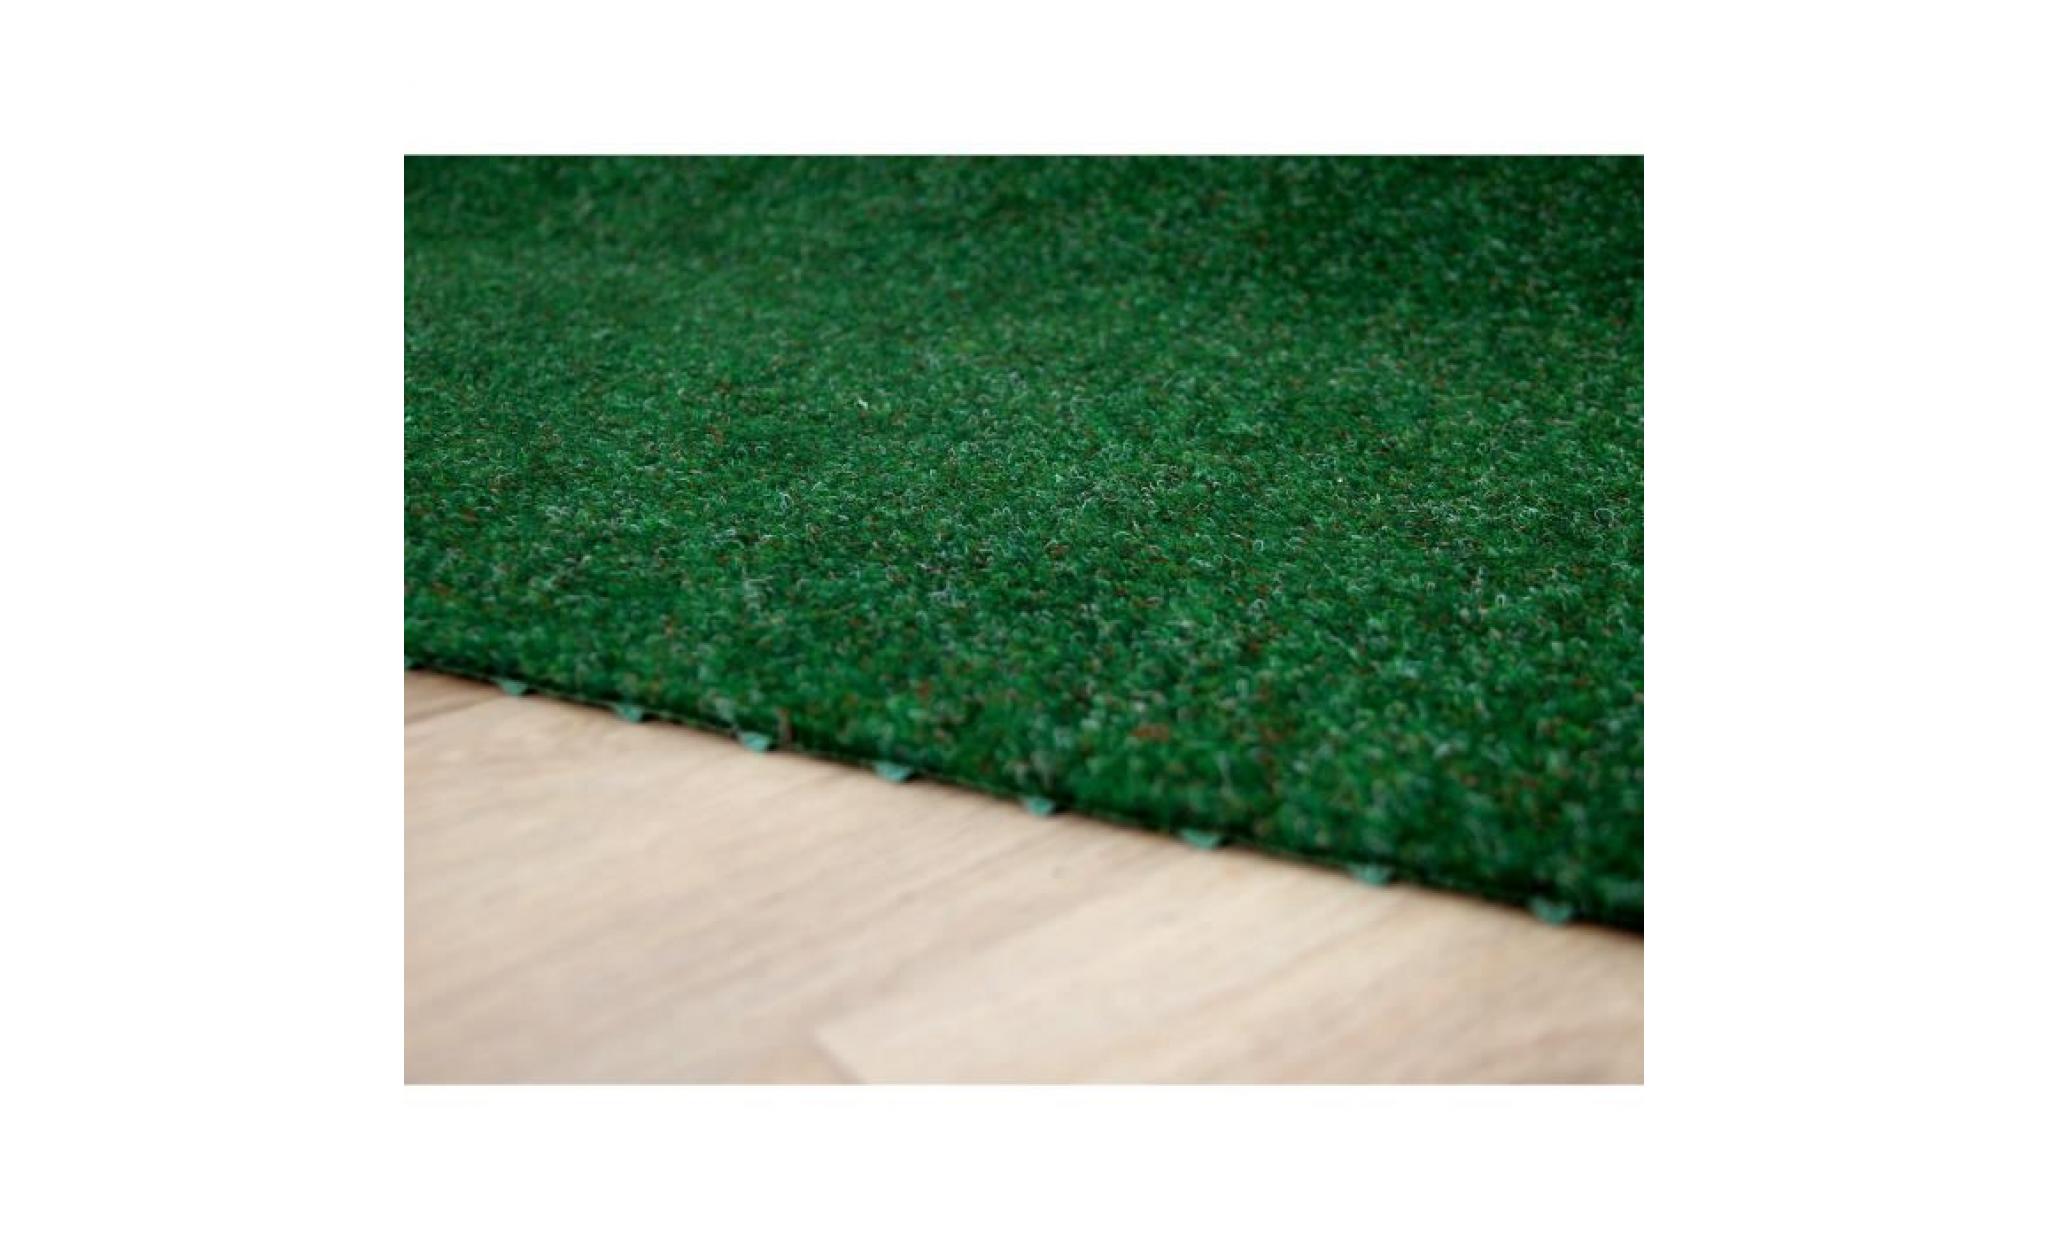 kingston   tapis type gazon artificiel – pour jardin, terrasse, balcon   beige [400x50 cm] pas cher